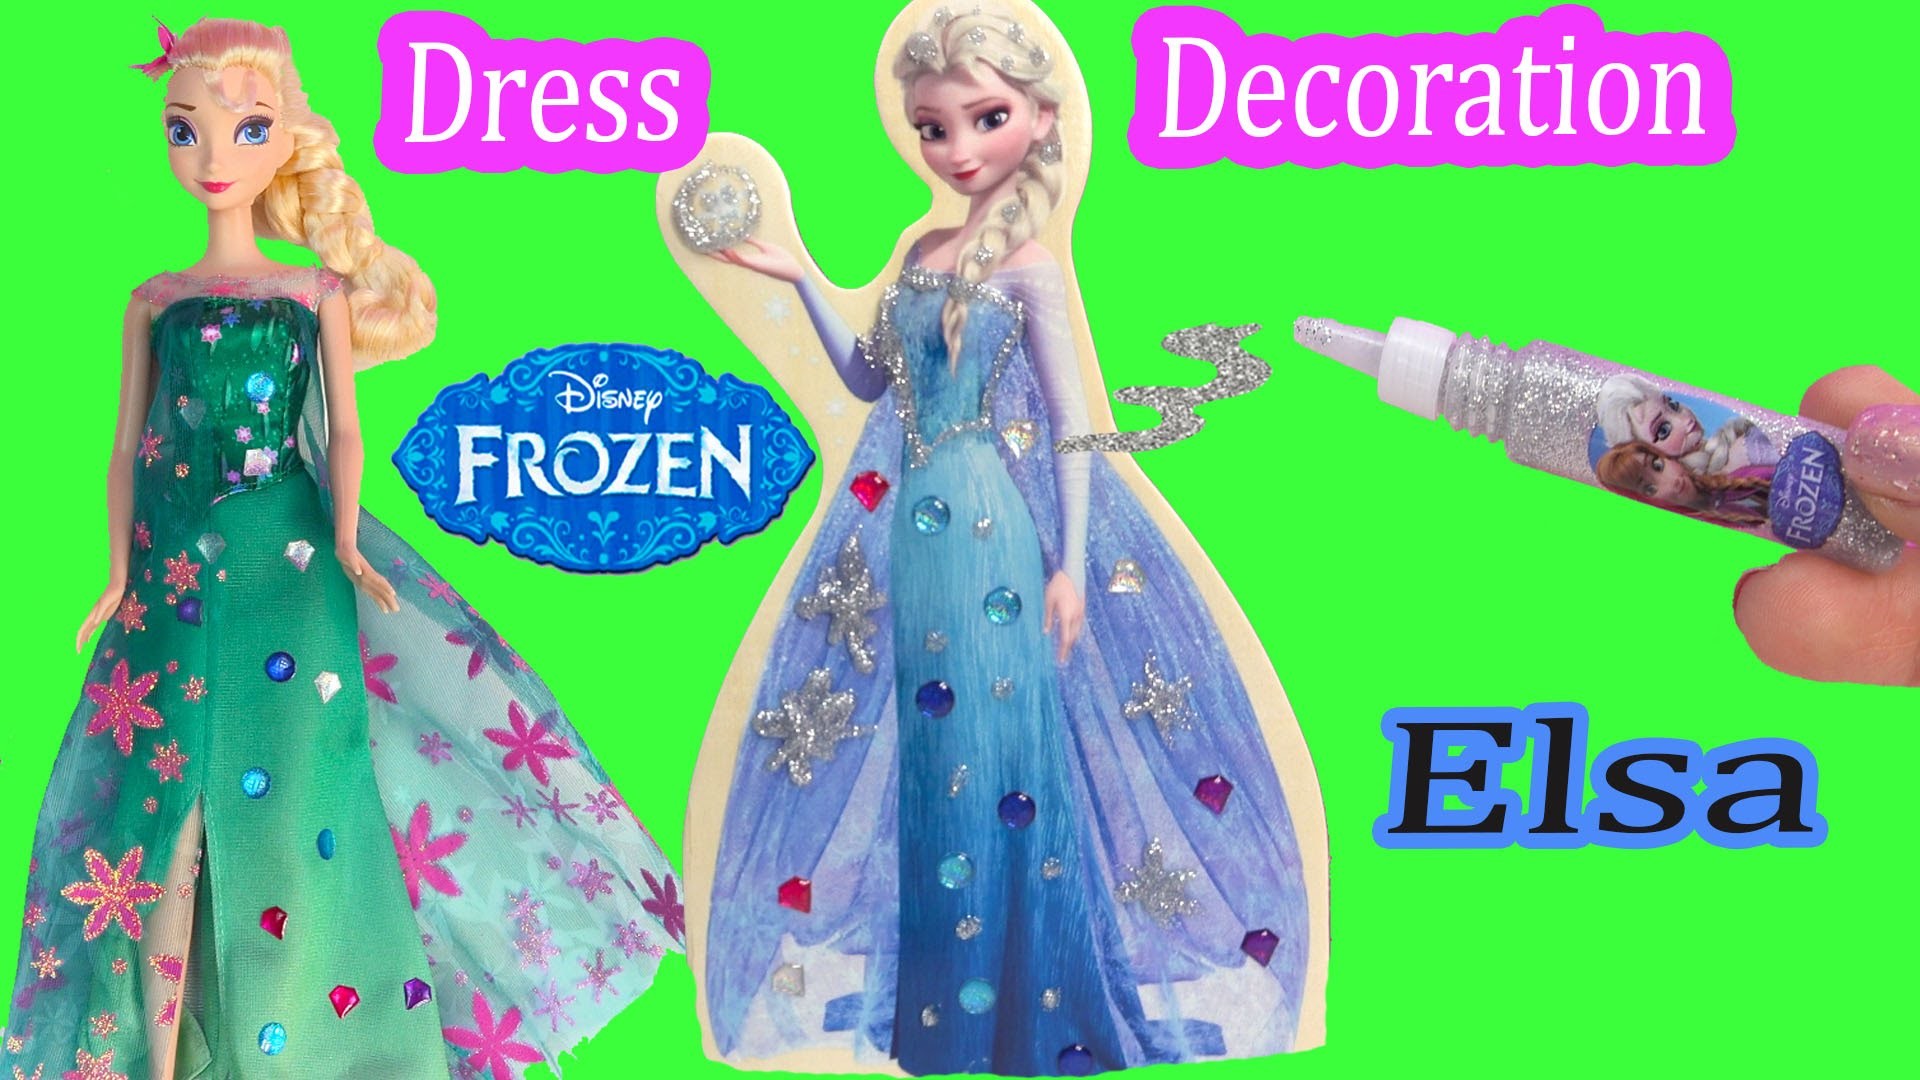 1920x1080 Queen Elsa Wooden Doll Glitter & Jewel Dress Decoration Craft Playset Frozen  Fever Dressup Unboxing - YouTube